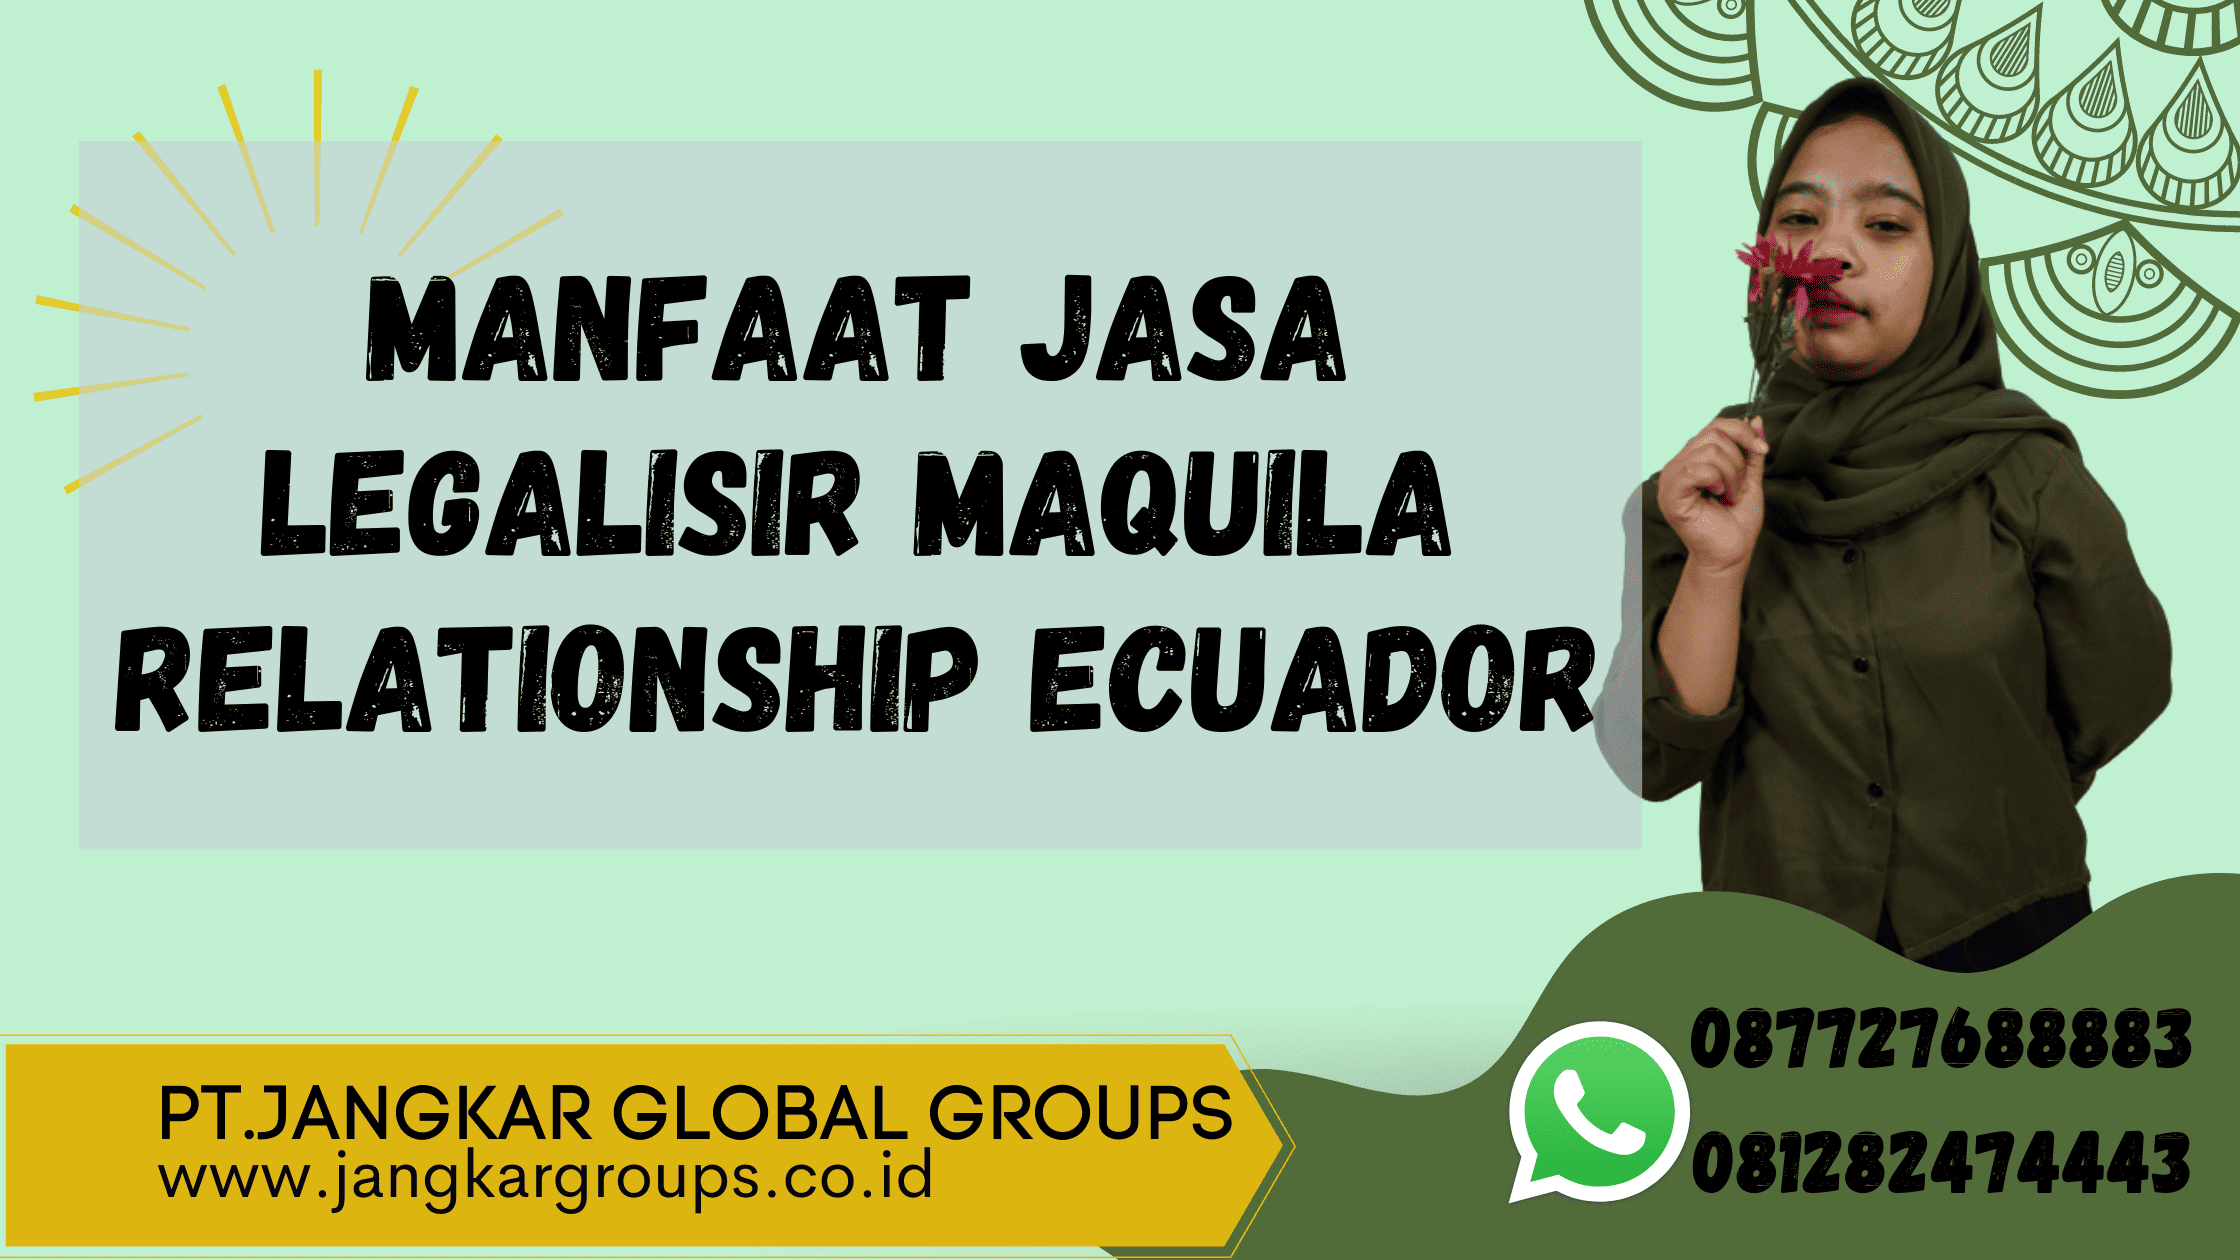 Manfaat Jasa Legalisir Maquila Relationship Ecuador